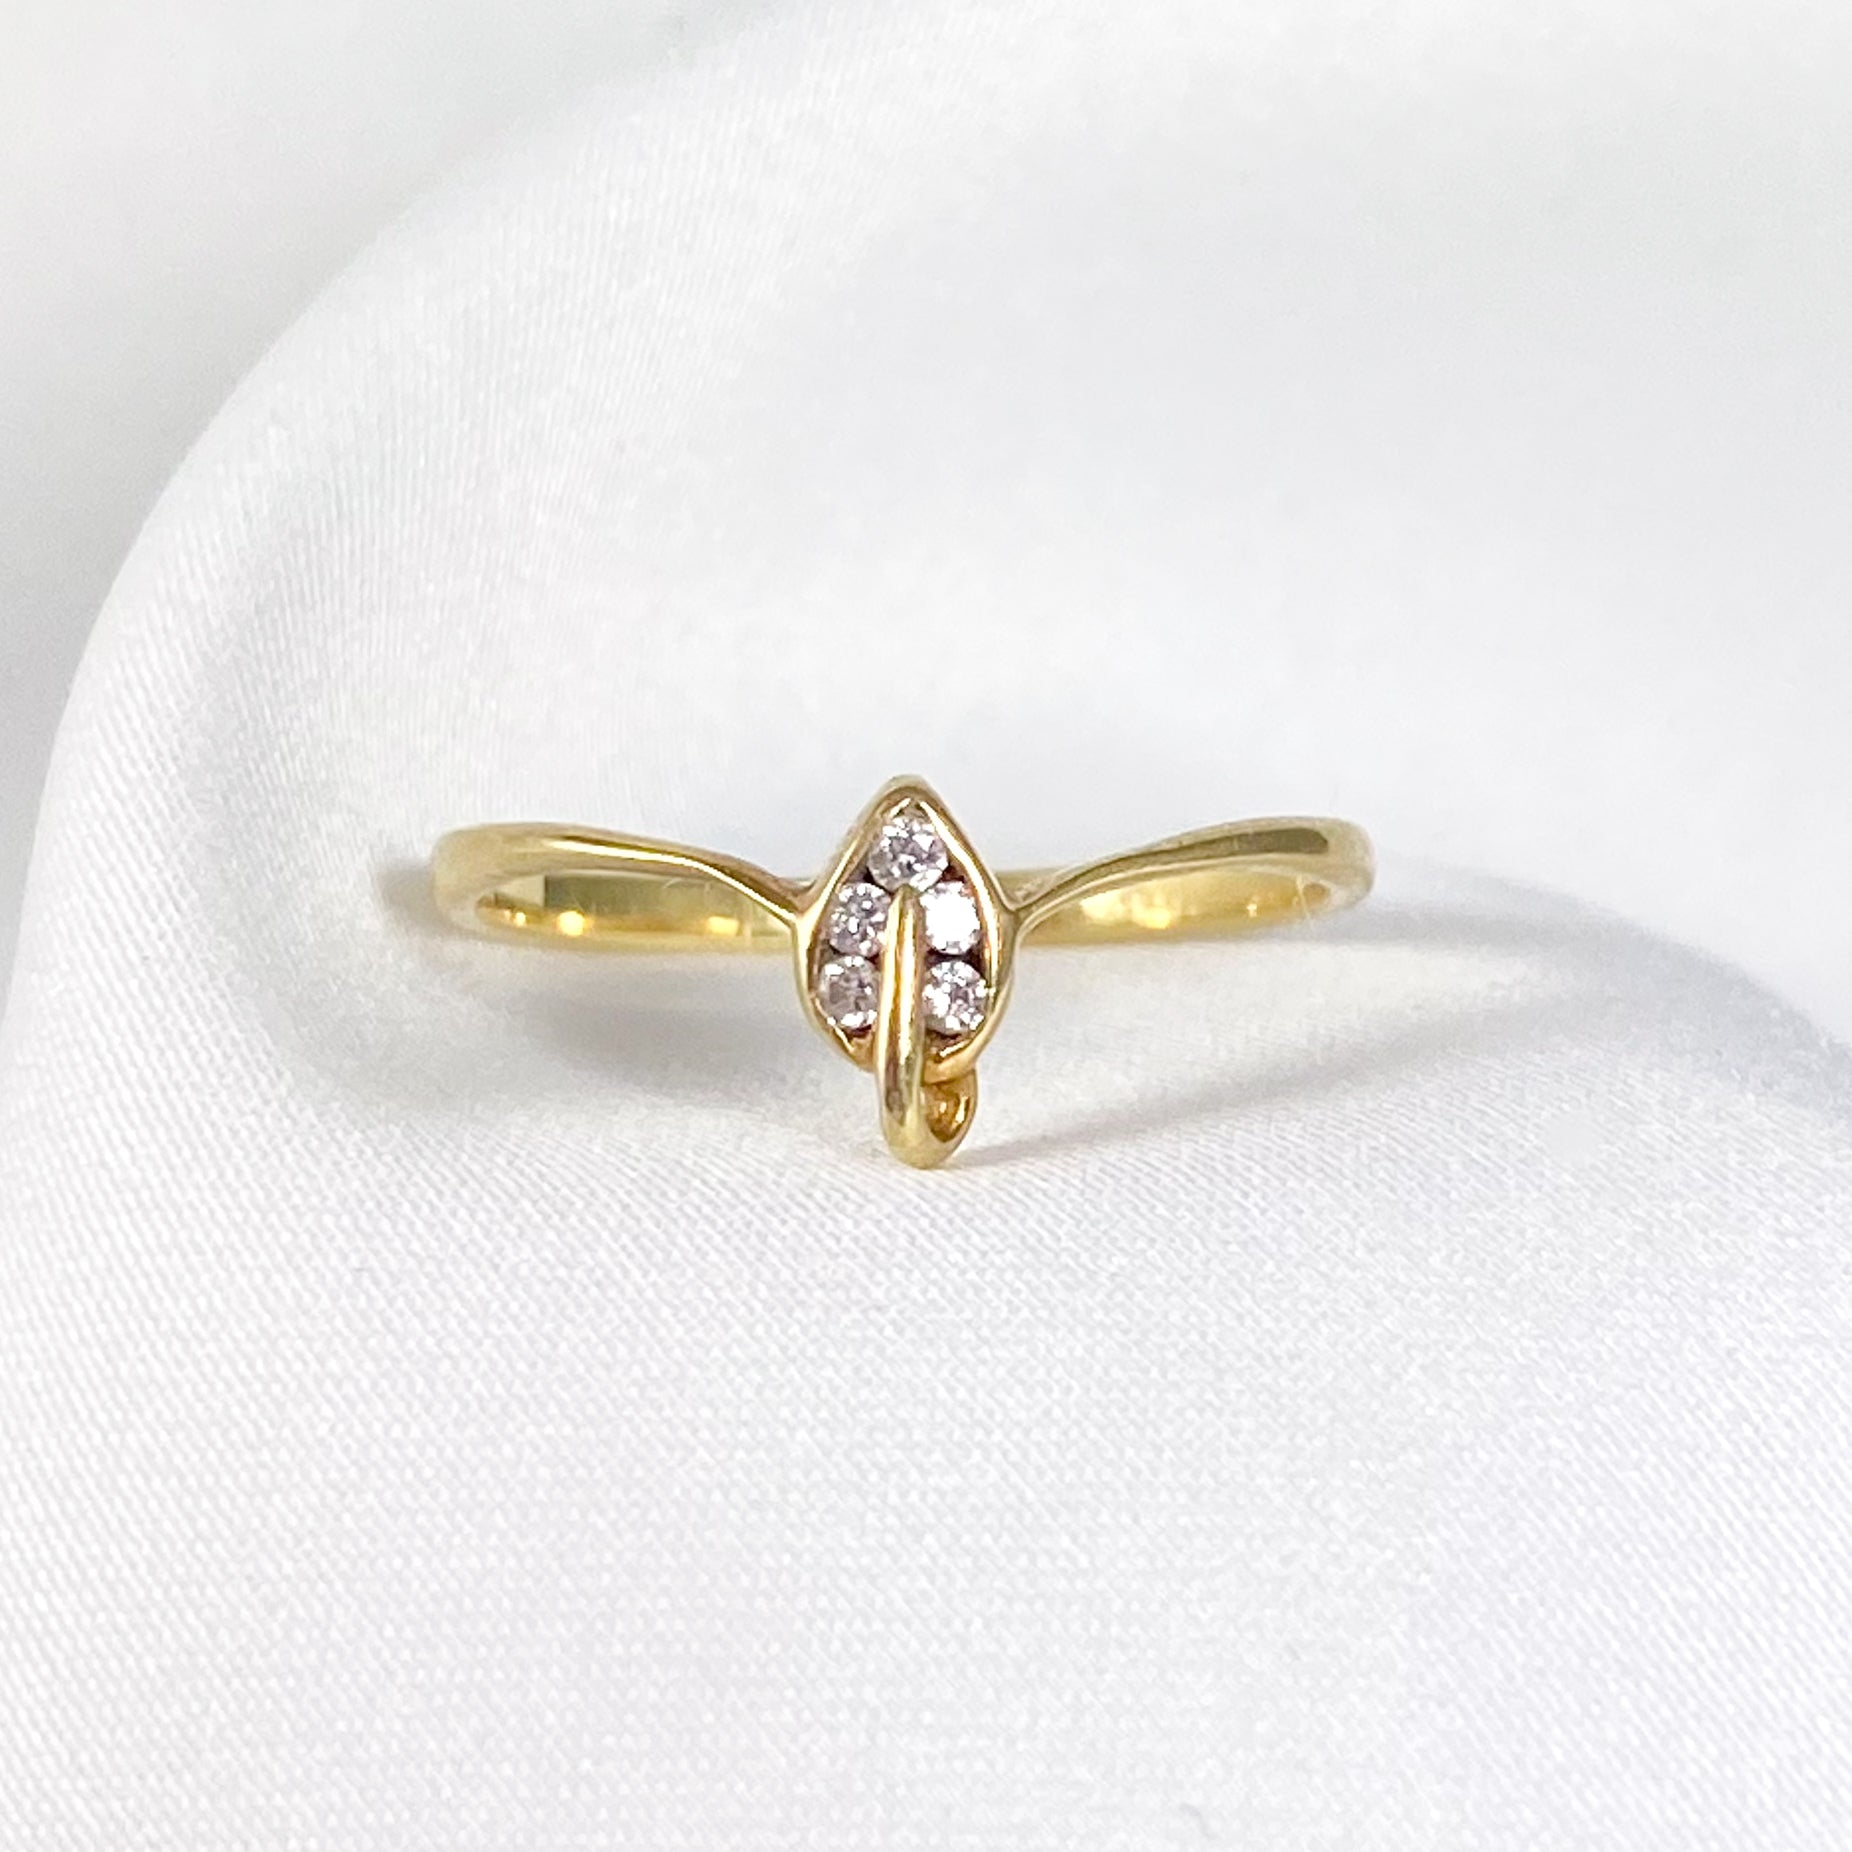 Vintage elegant diamond ring